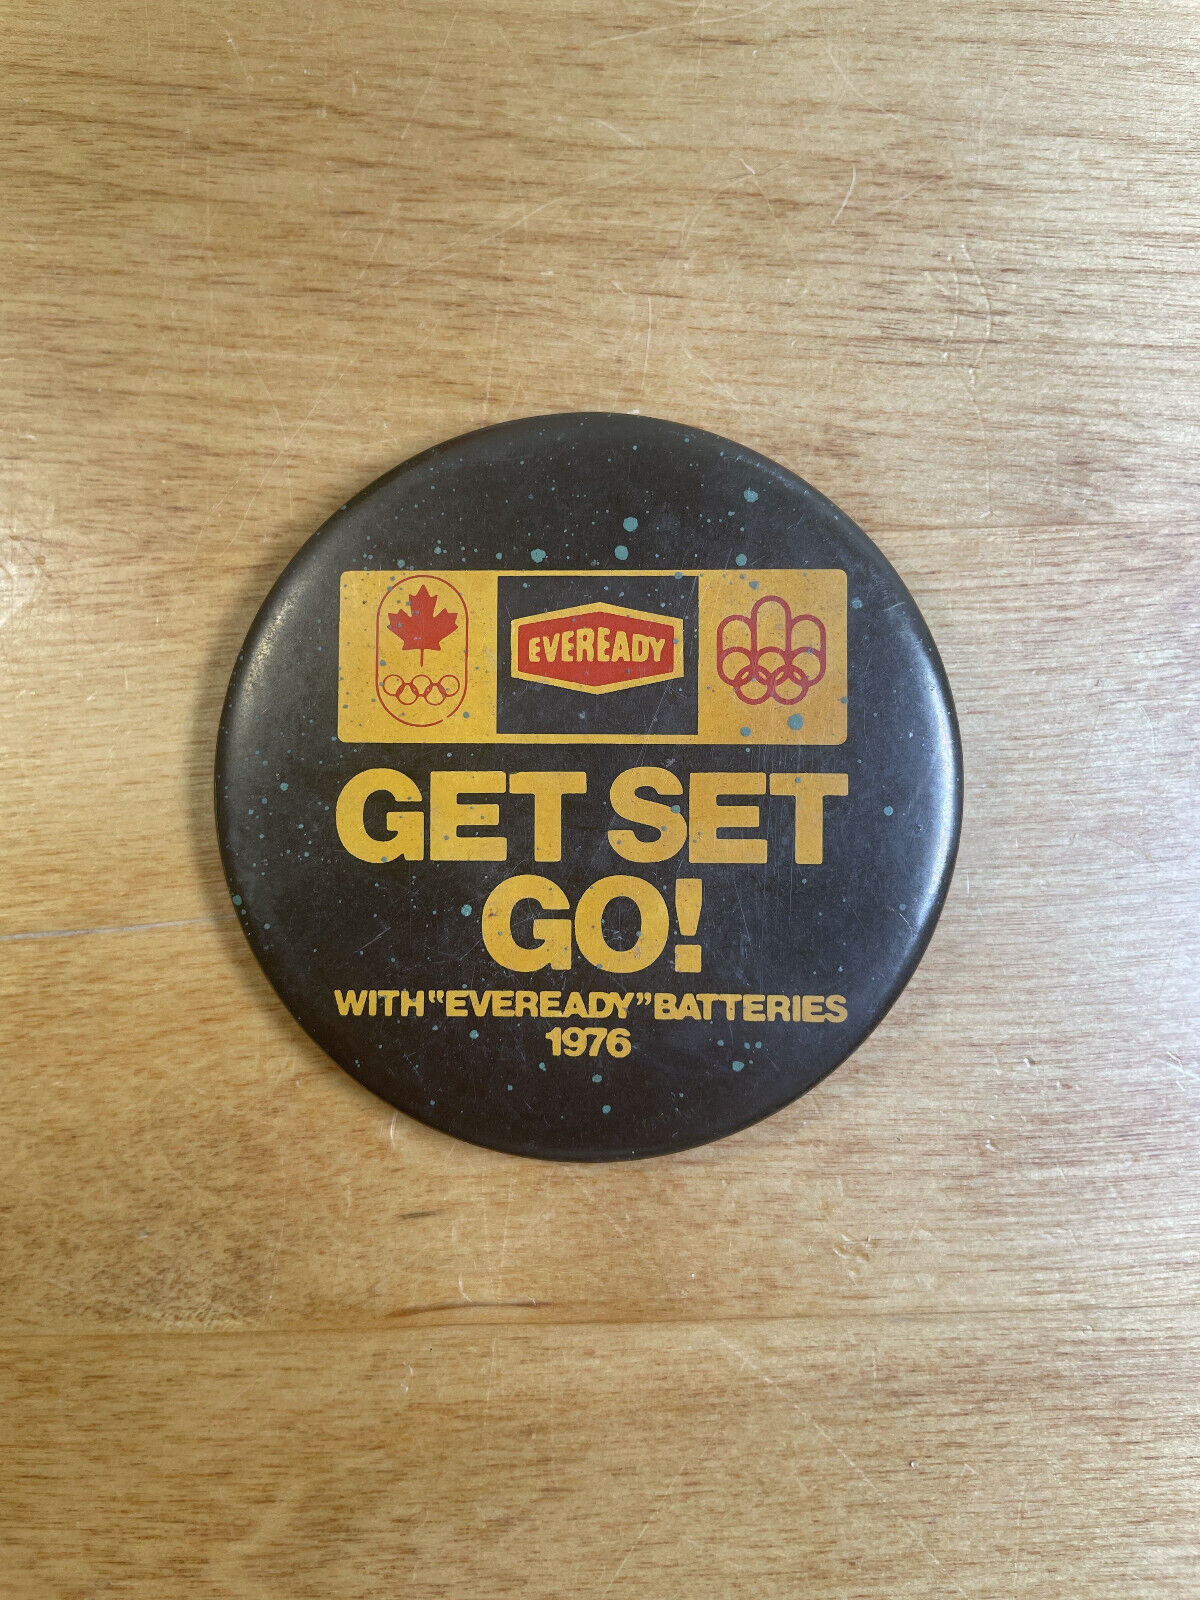 Eveready Get Set Go Batteries Ad Marketing 1976 Vintage Metal Pinback Pin Button